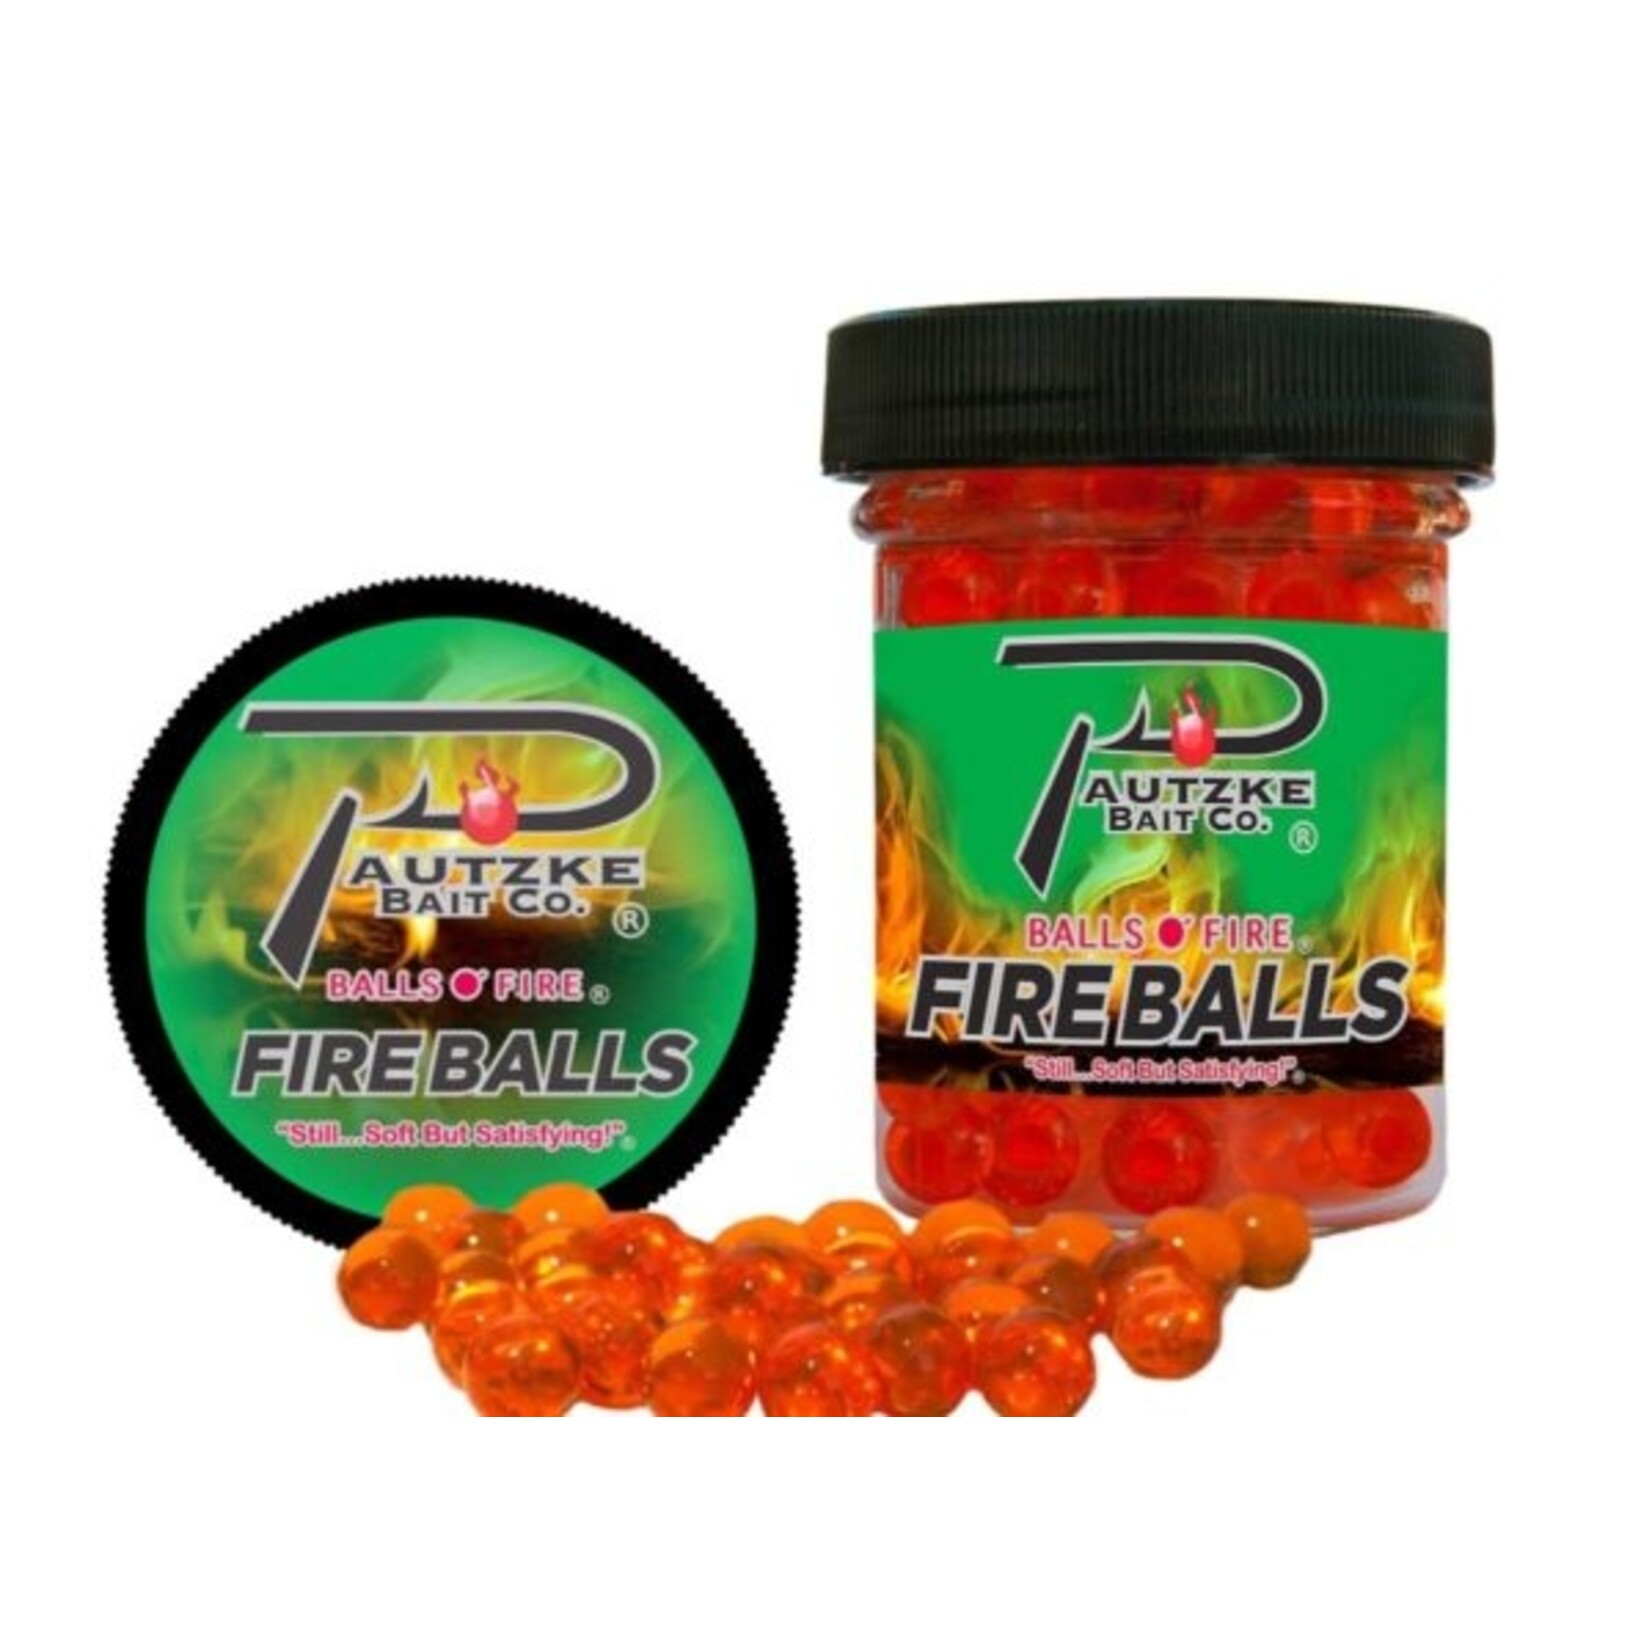 Pautzke Bait Co. Fireballs 1.65oz